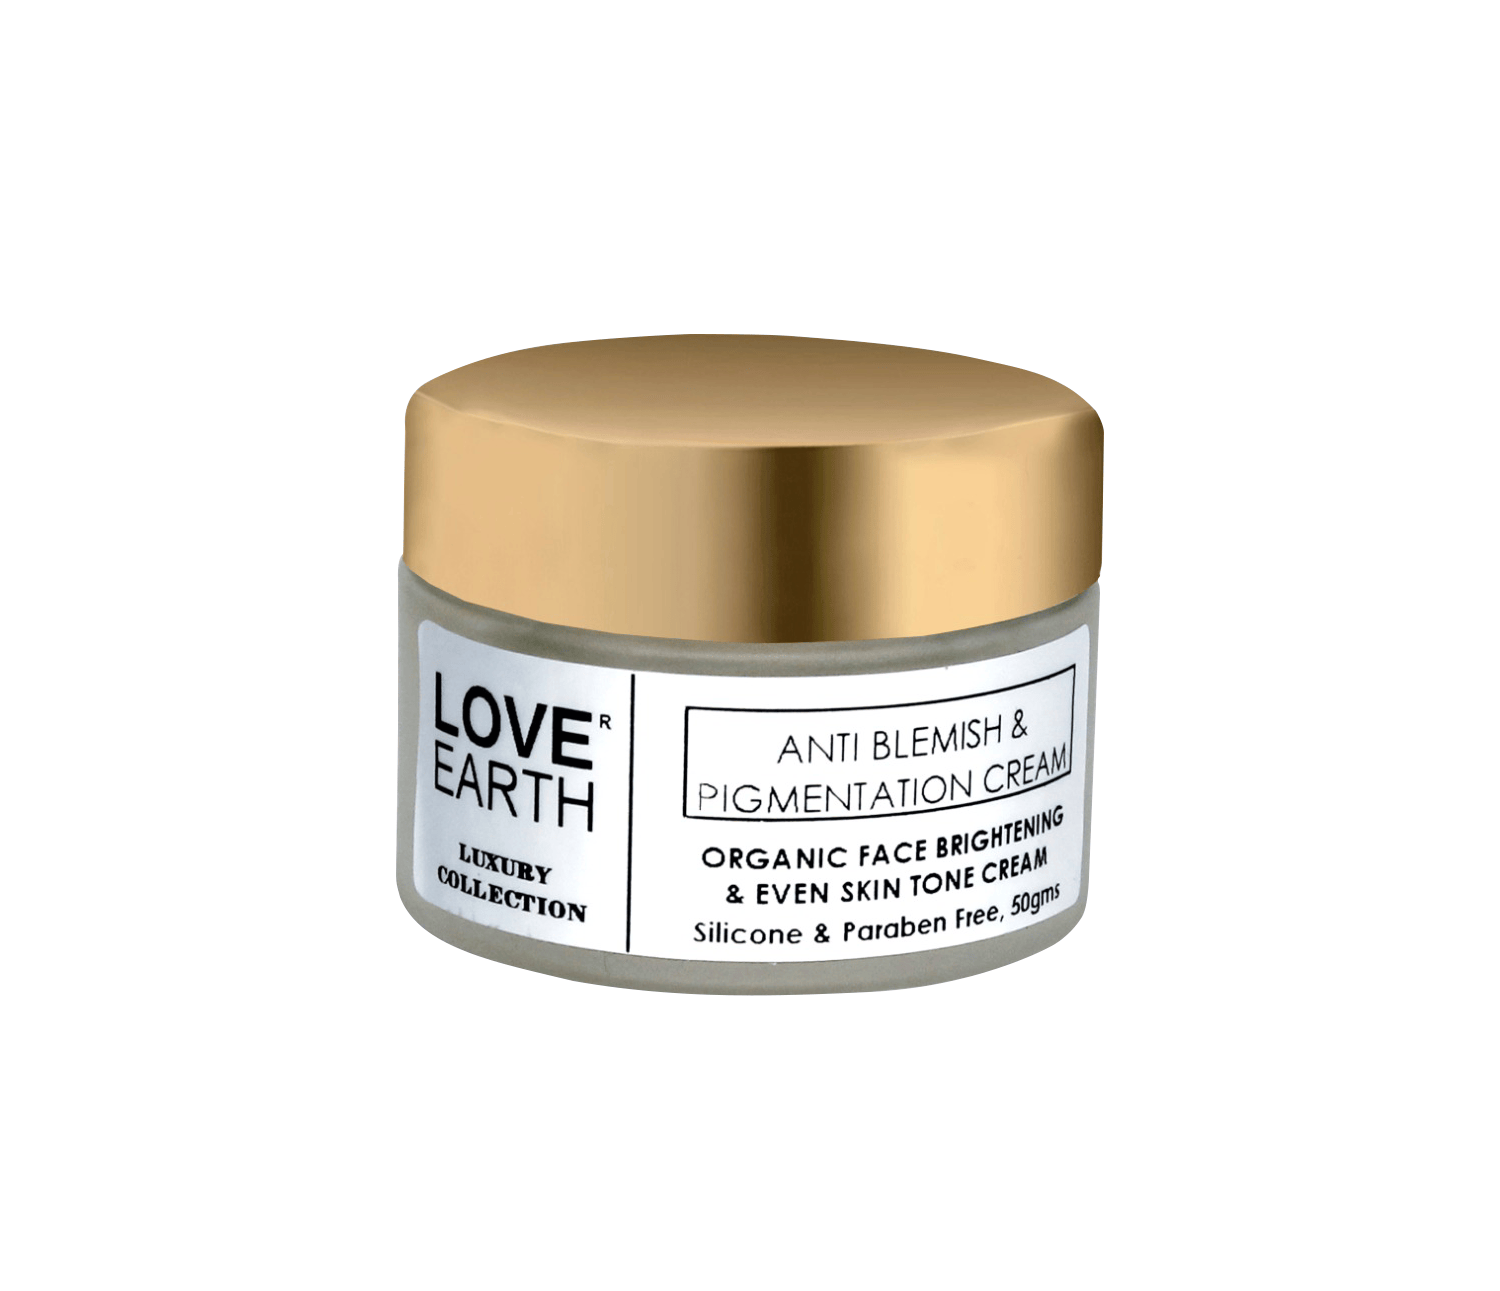 LOVE EARTH | Love Earth Anti-Blemish & Anti-Pigmentation Cream With Aloe Vera & Vitmain E For Reducing Acne, Pimples, & Skin Brightening 50gm